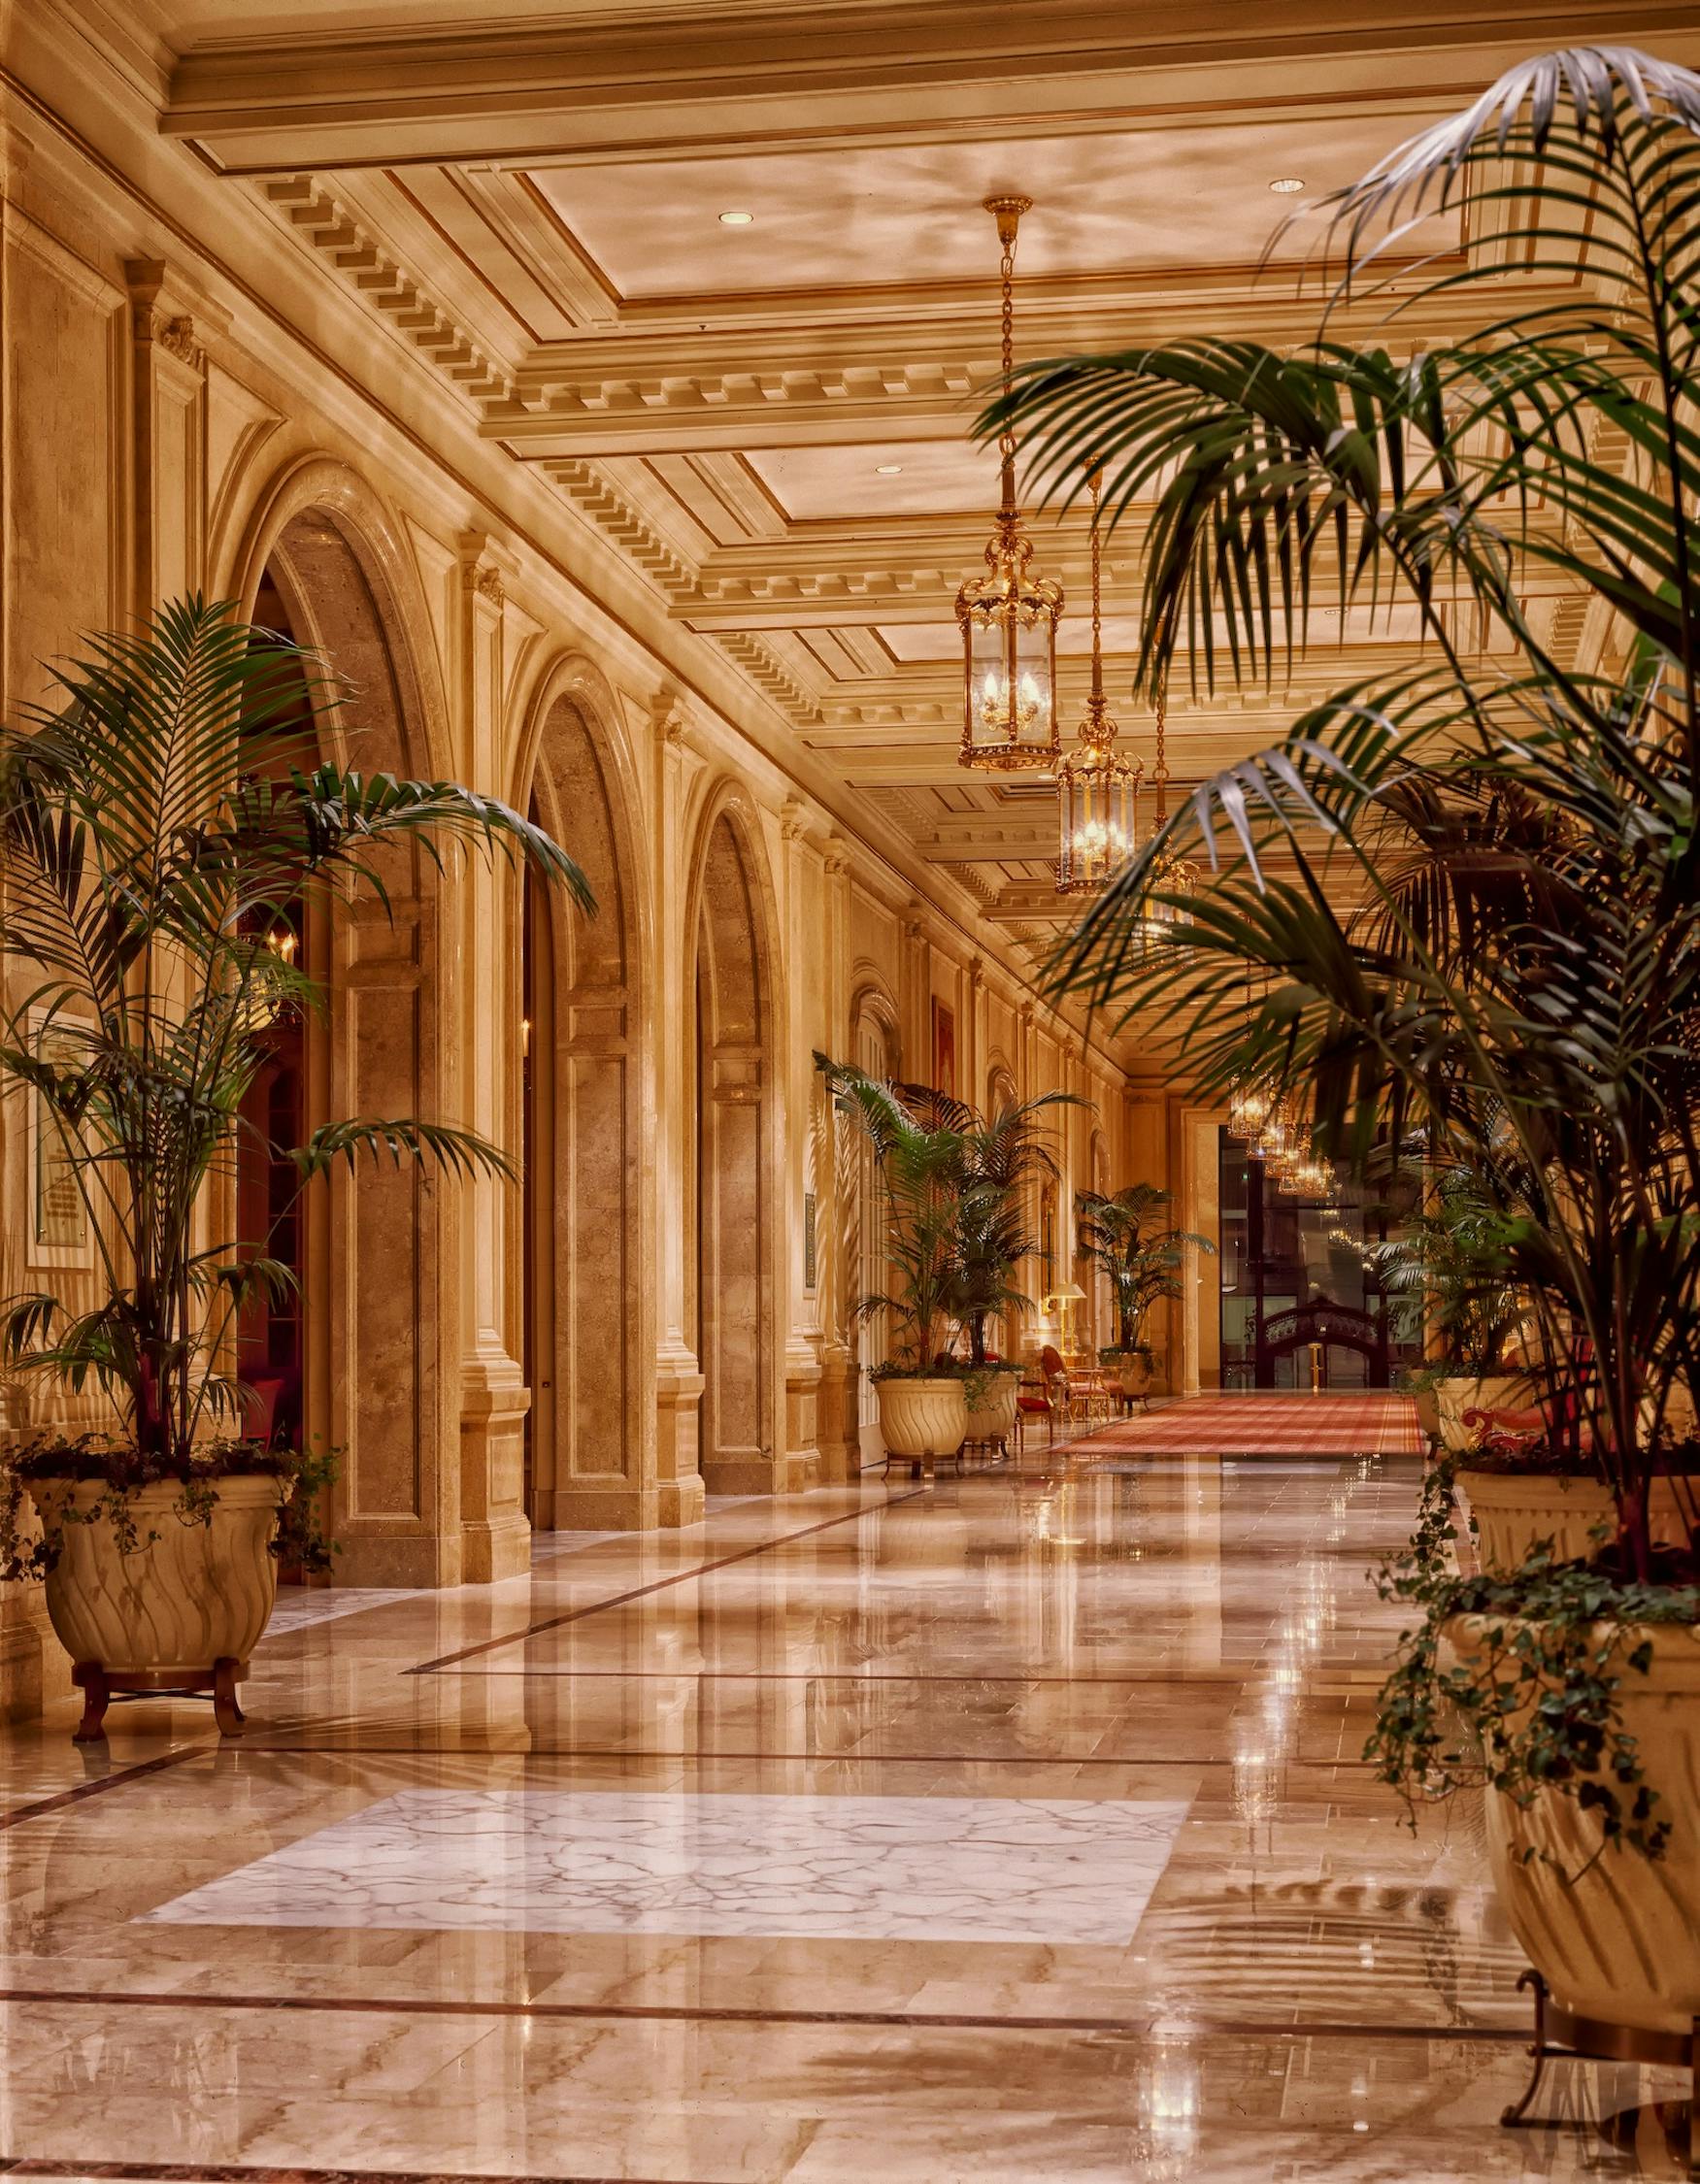 https://images.pexels.com/photos/53464/sheraton-palace-hotel-lobby-architecture-san-francisco-53464.jpeg?auto=compress&cs=tinysrgb&dpr=3&h=750&w=1260